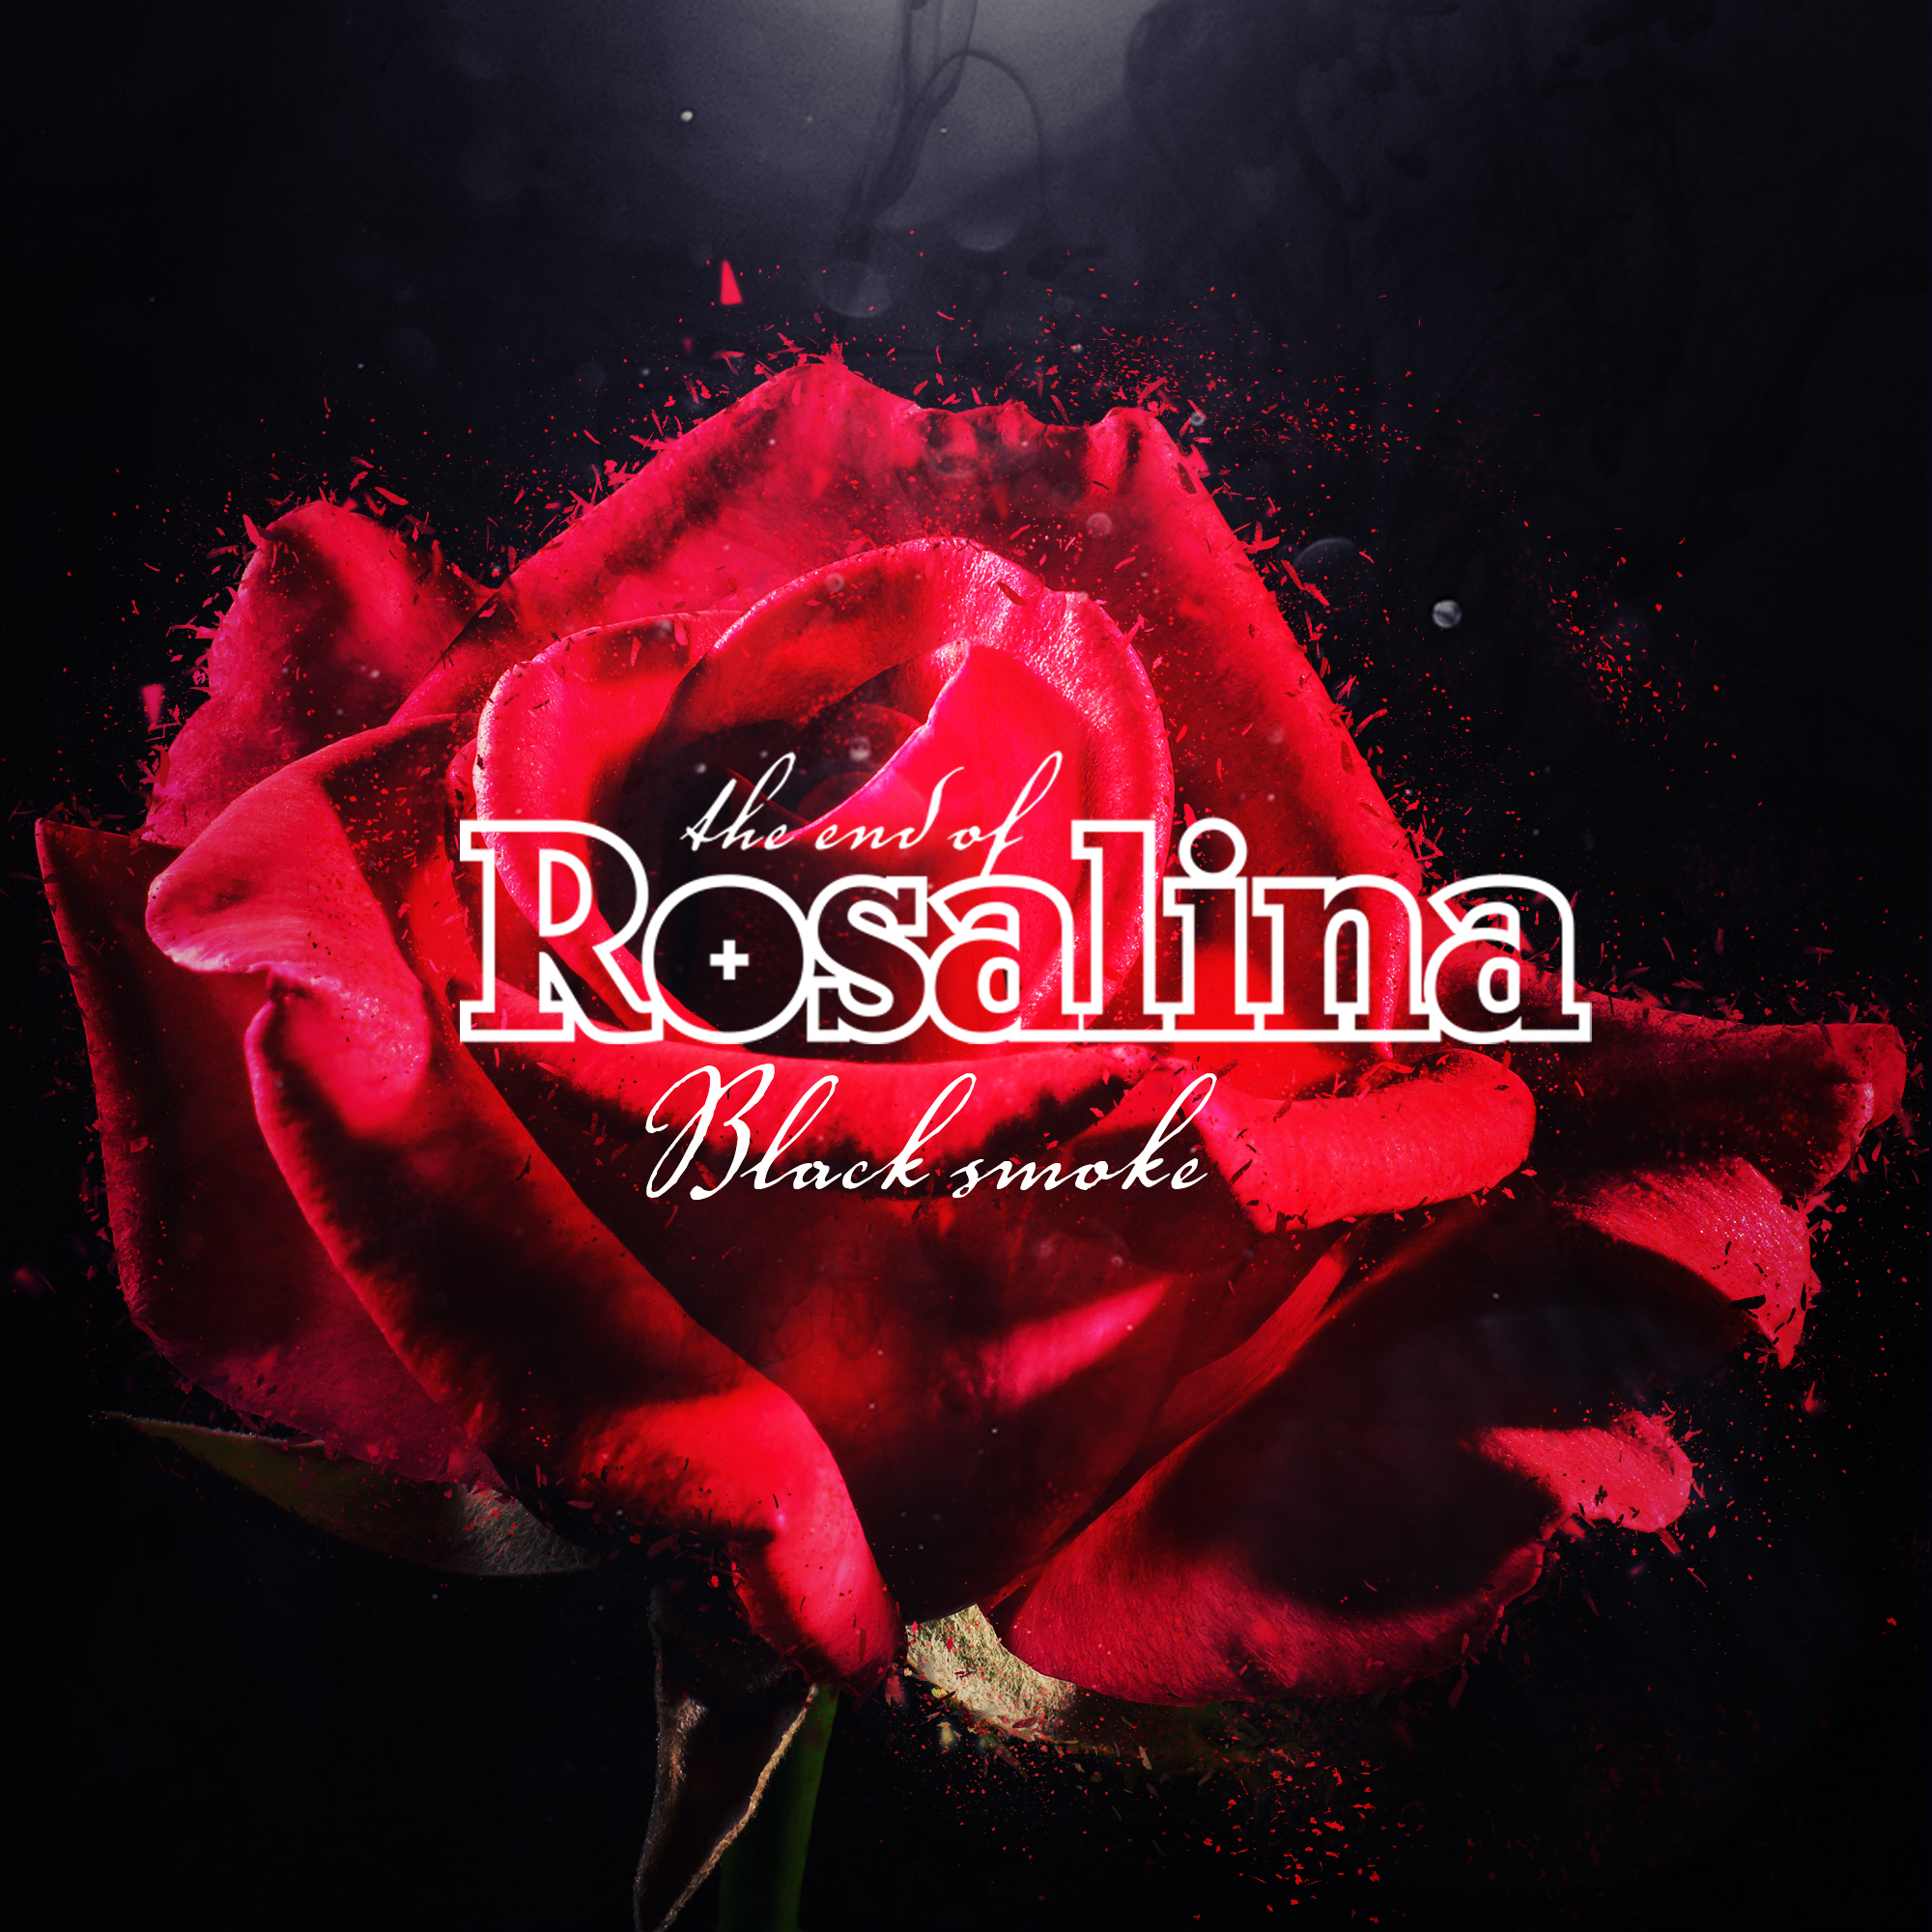 THE END OF ROSALINA – “Black Smoke”